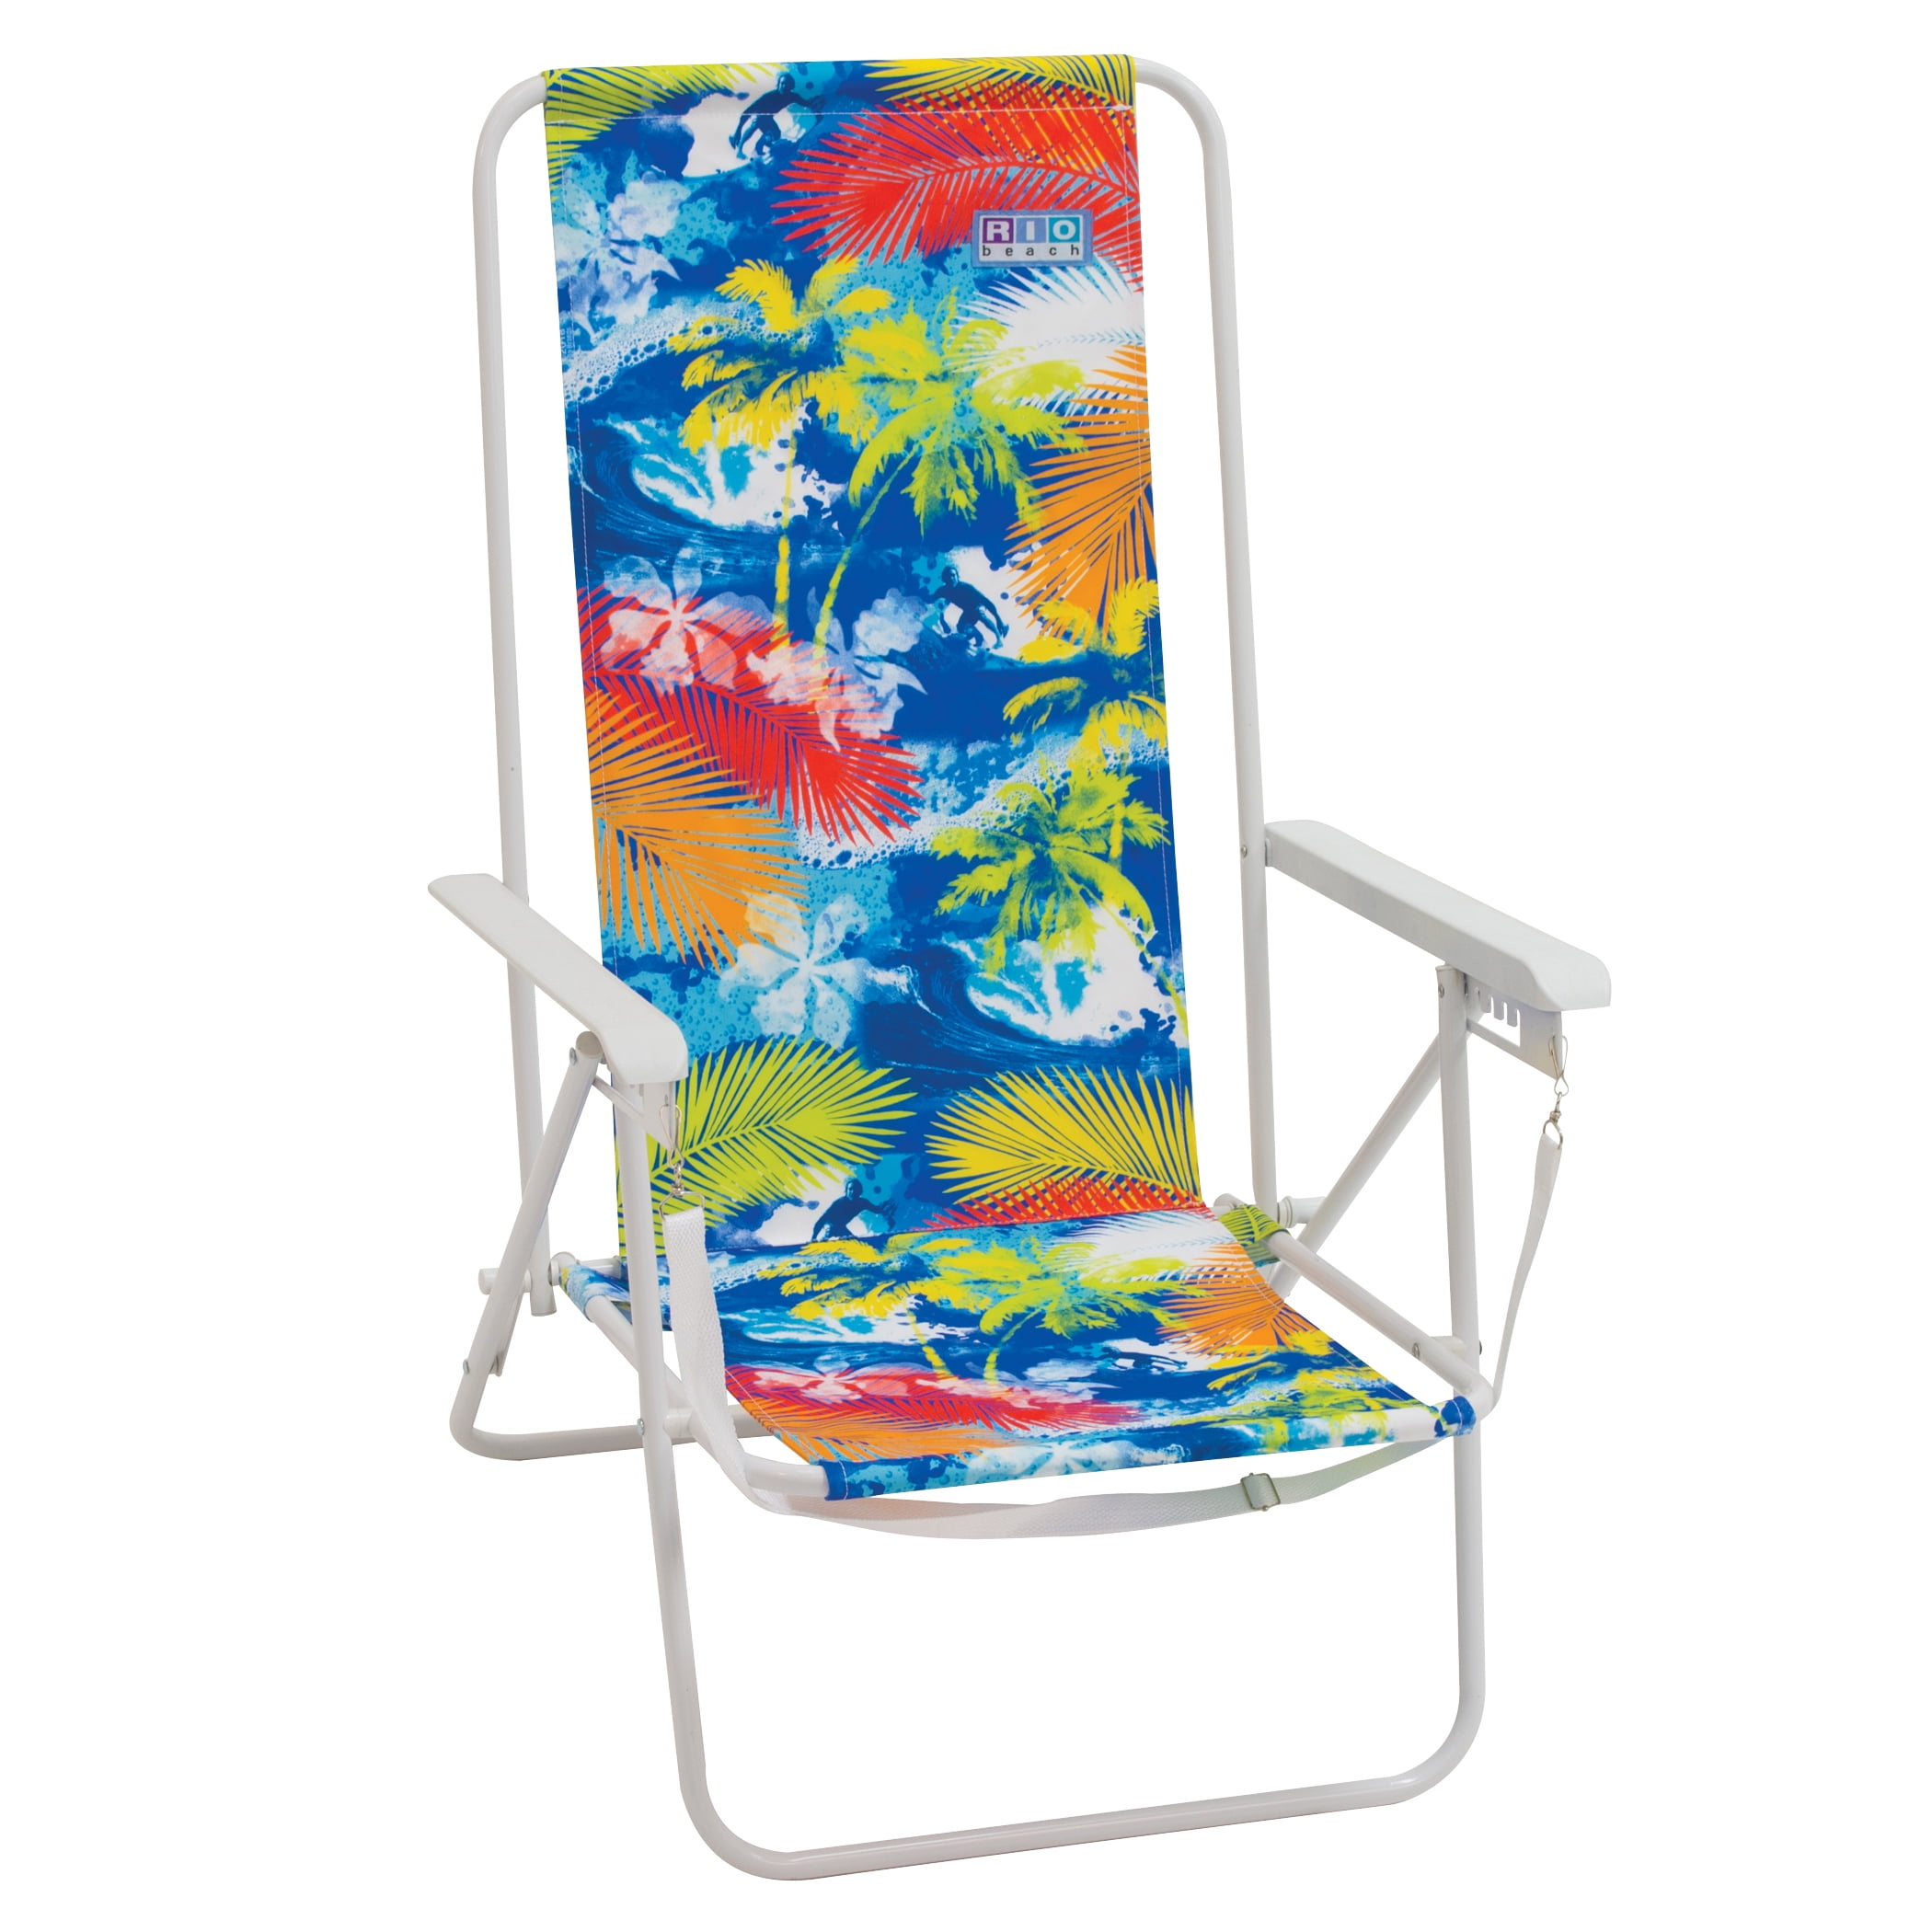 Unique Rio Beach Chairs Walmart for Simple Design